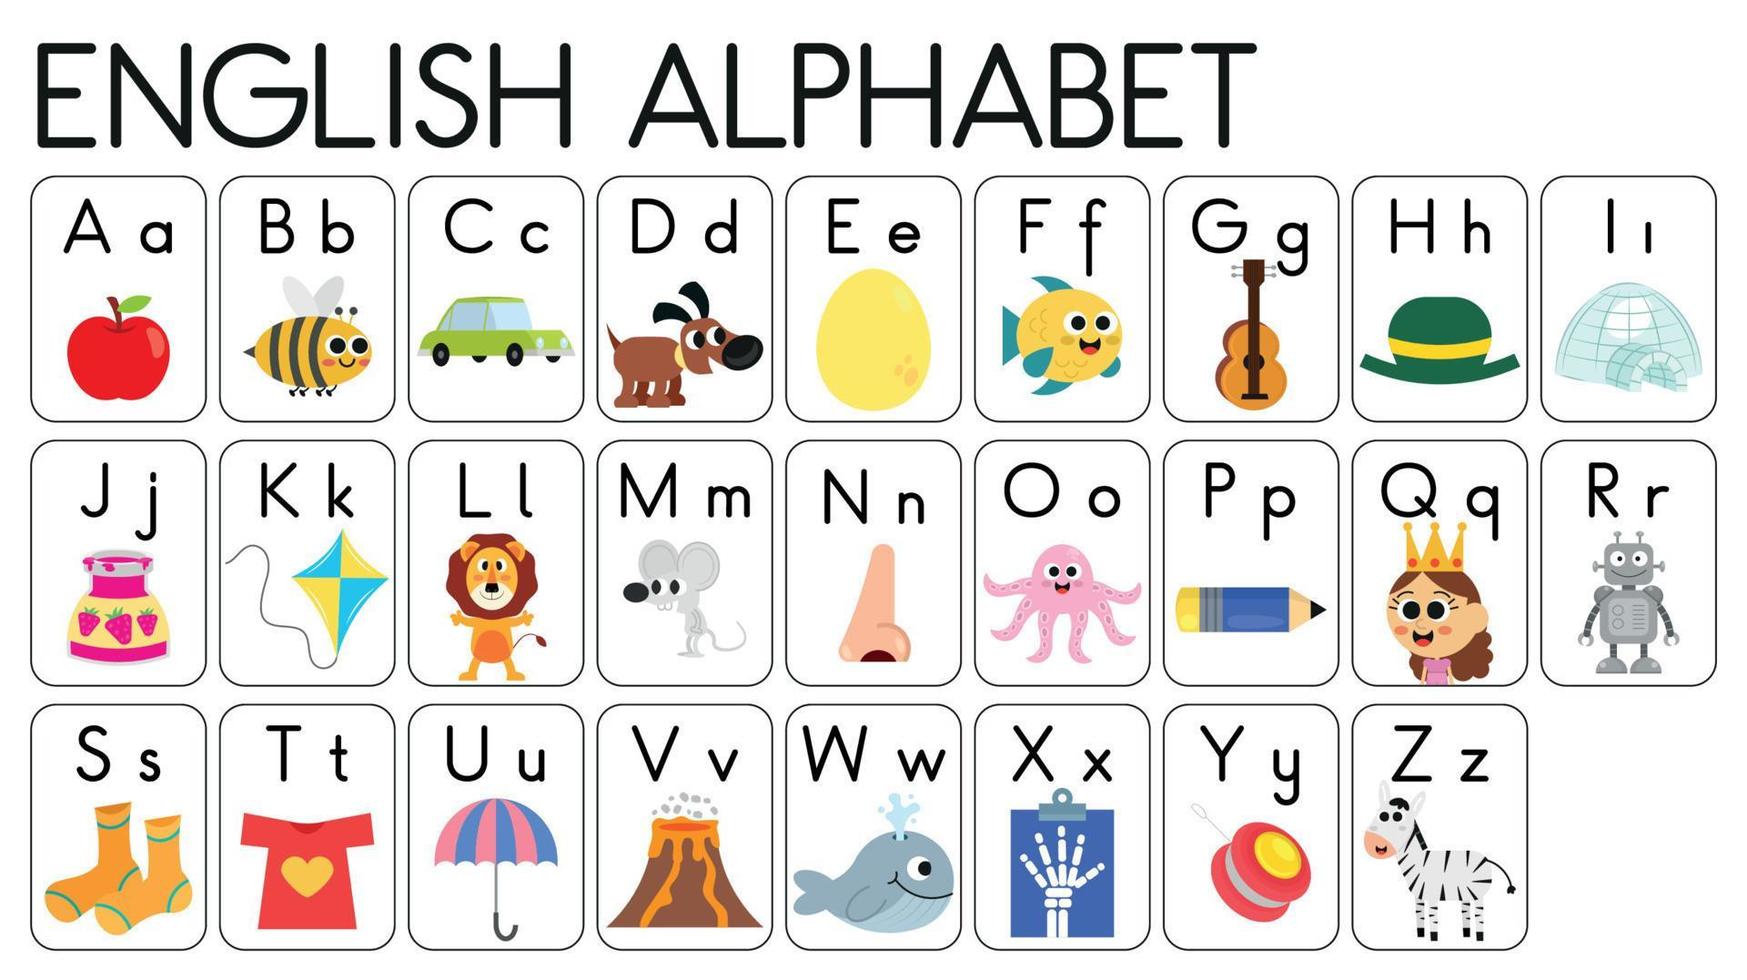 English alphabet illustrated dictionary.  English alphabet illustrated dictionary for children.  Illustrated English alphabet flash cards. vector